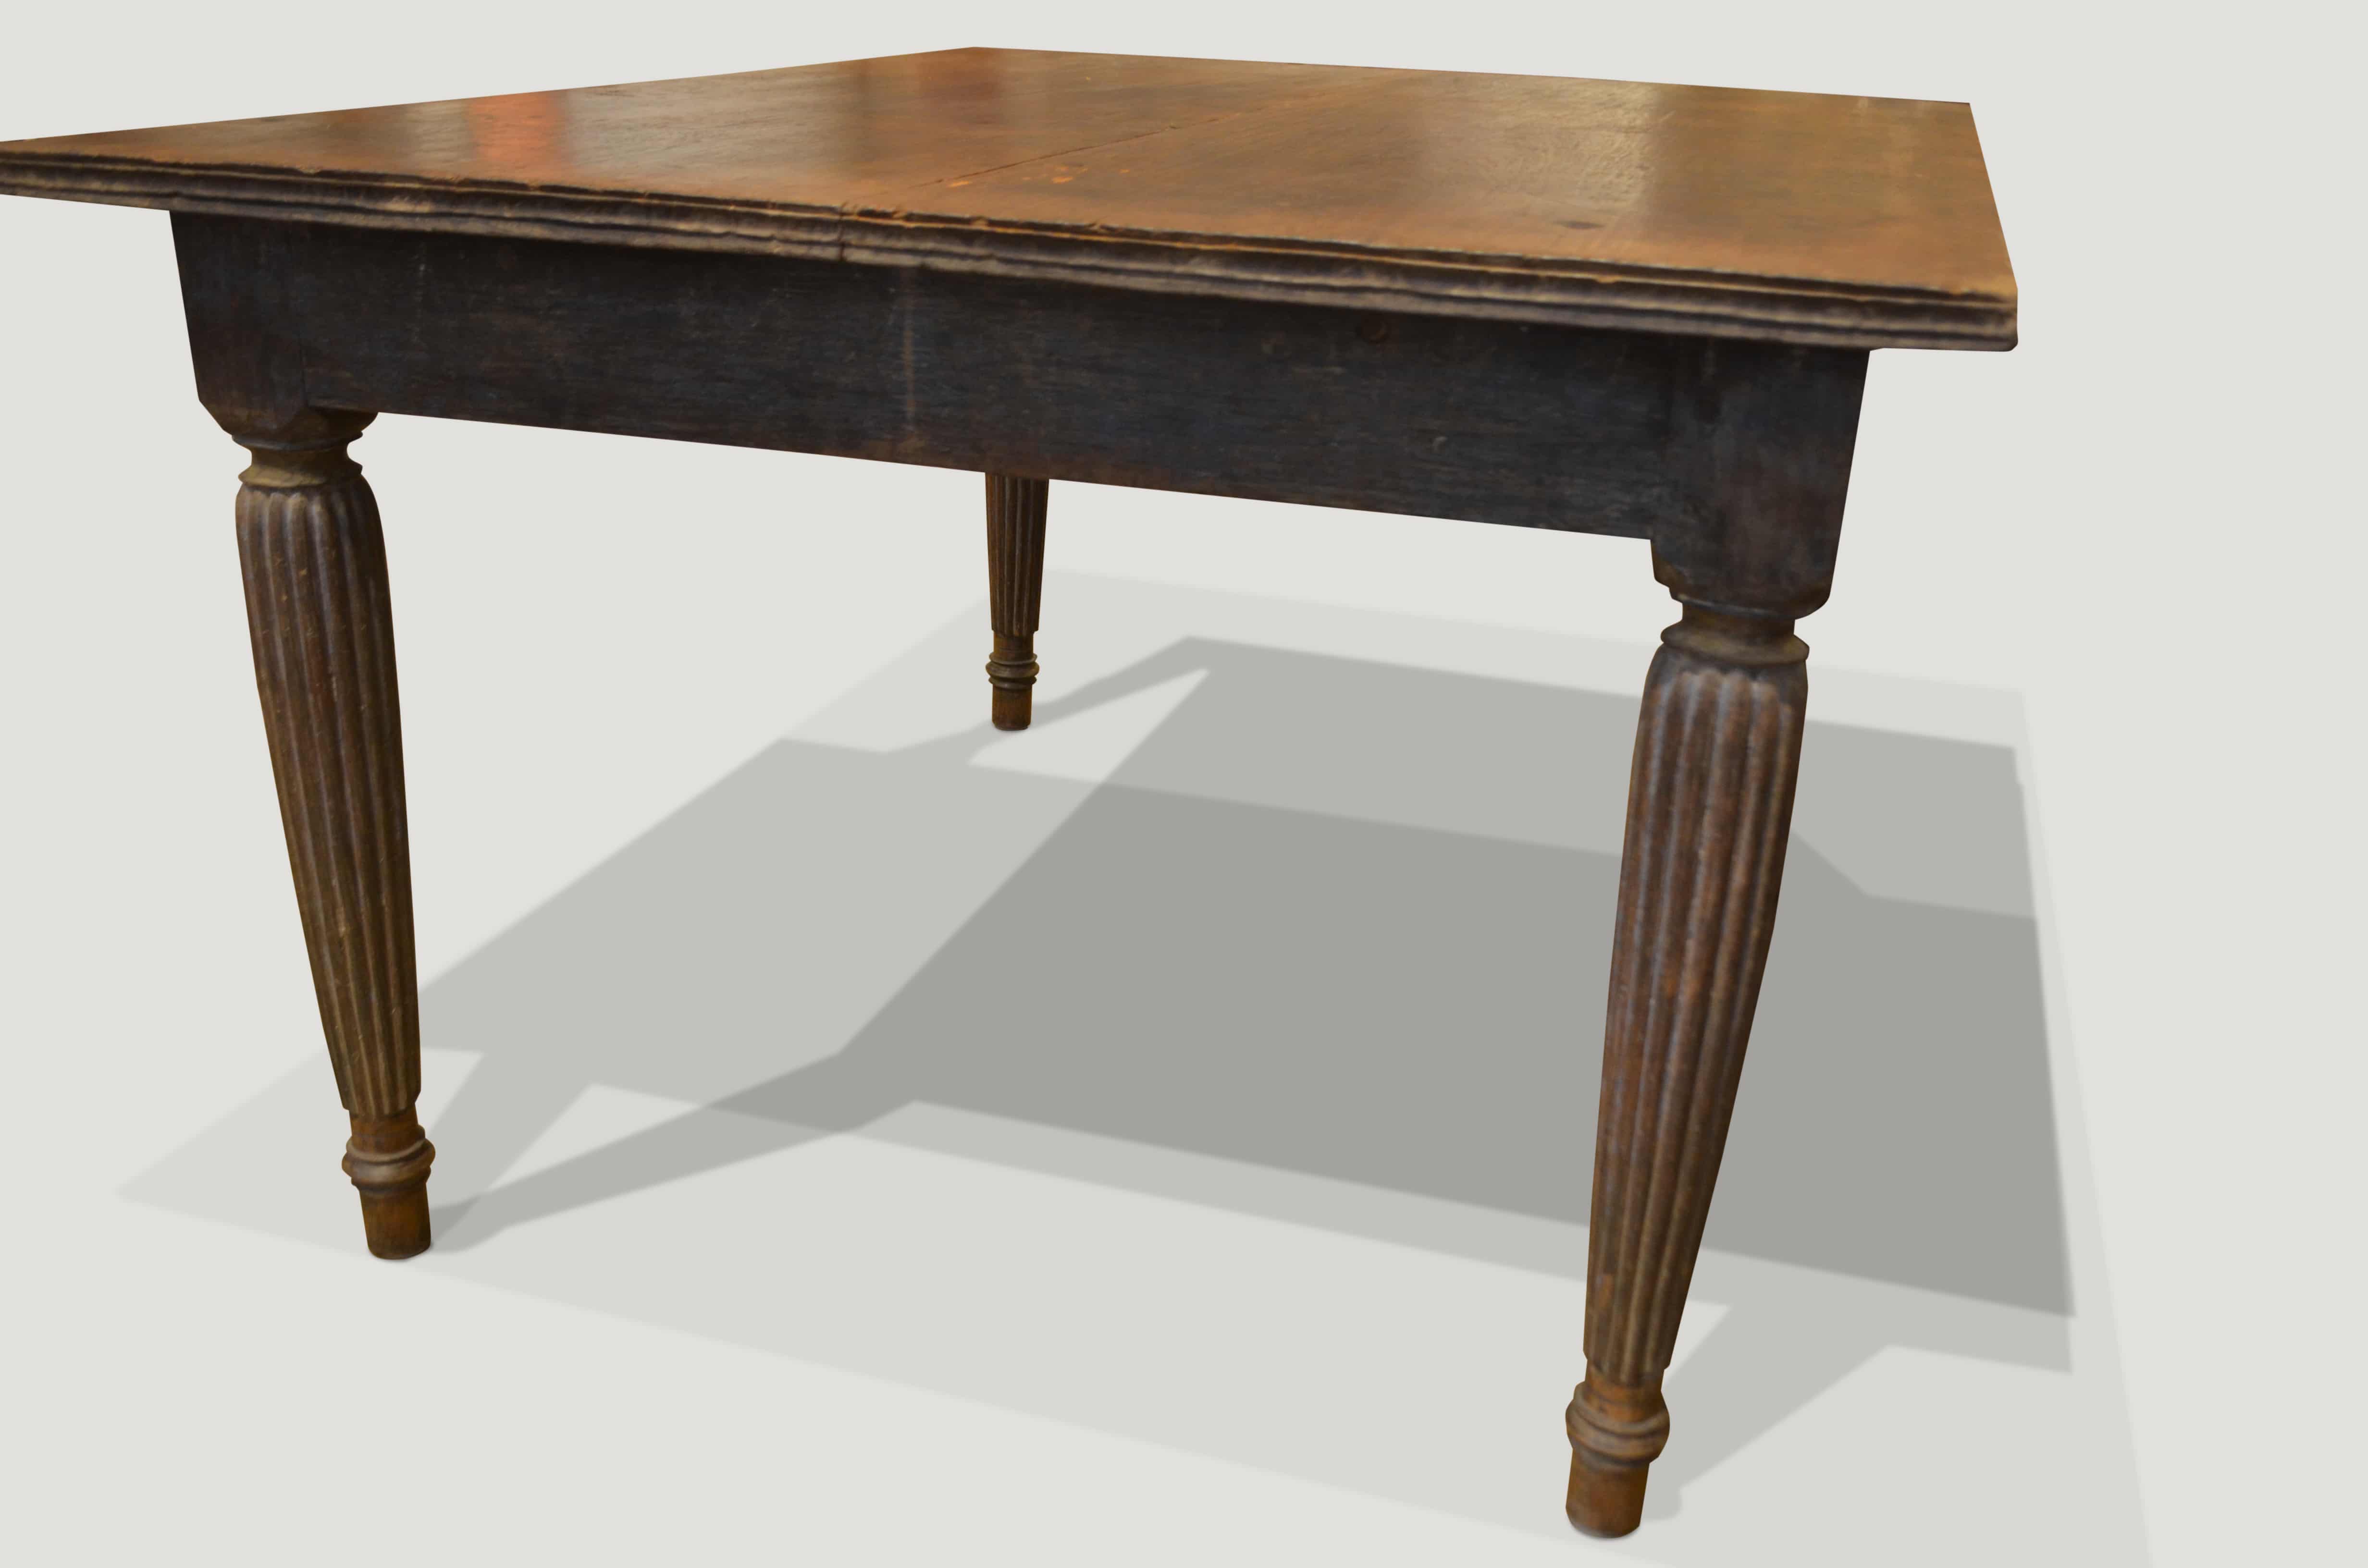 Antique teak dining table